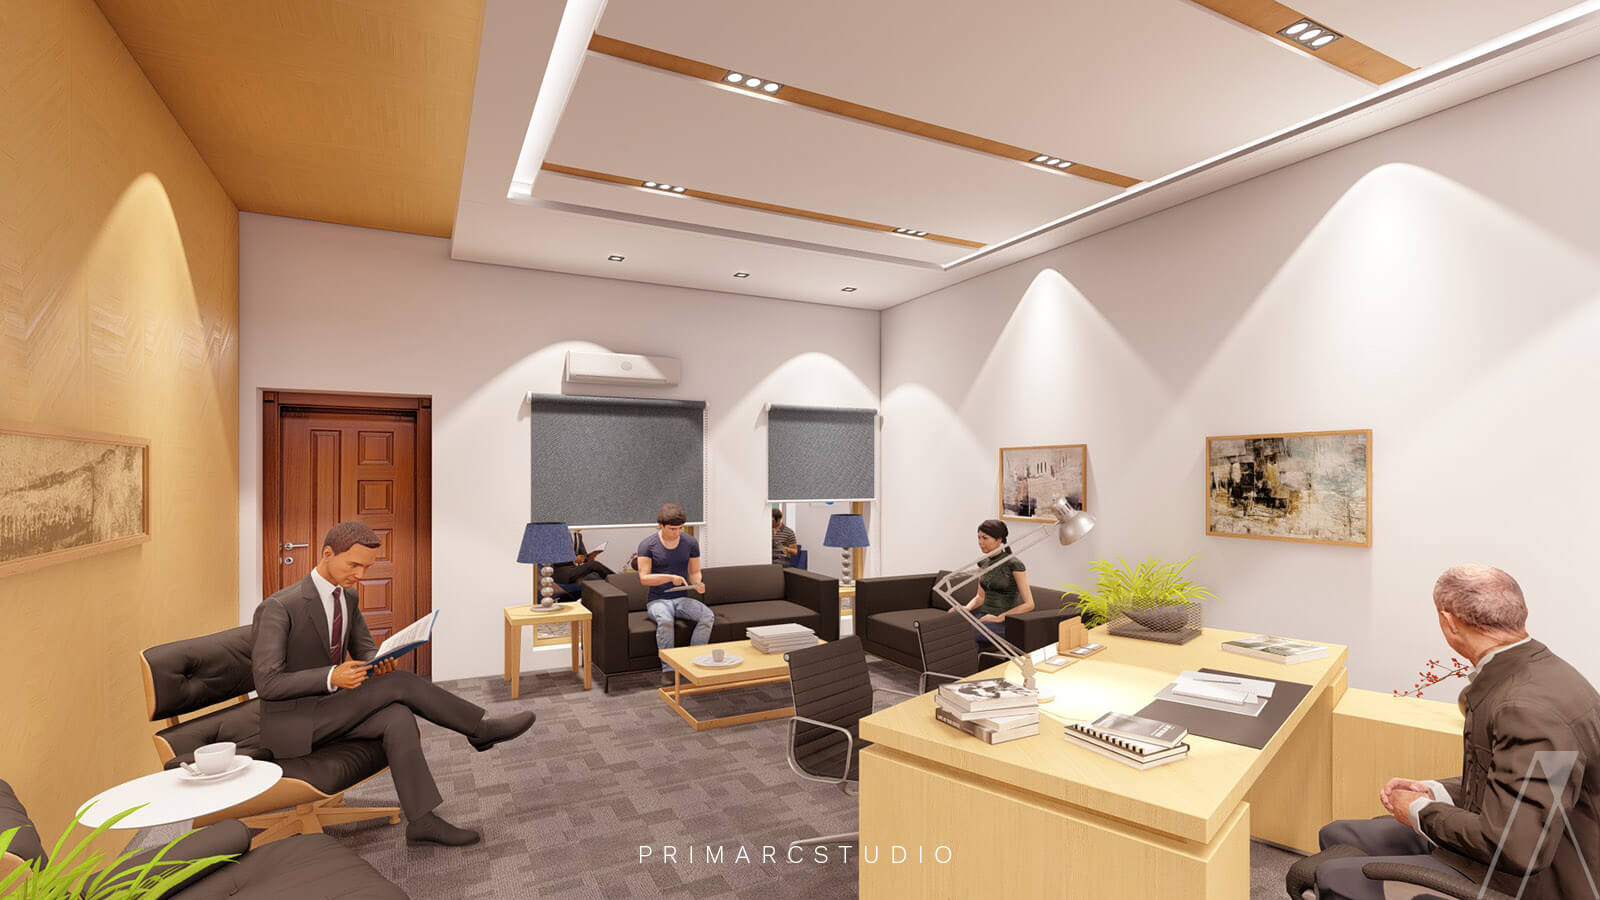 CEO office interior design with ceiling design in saddar rawalpindi.